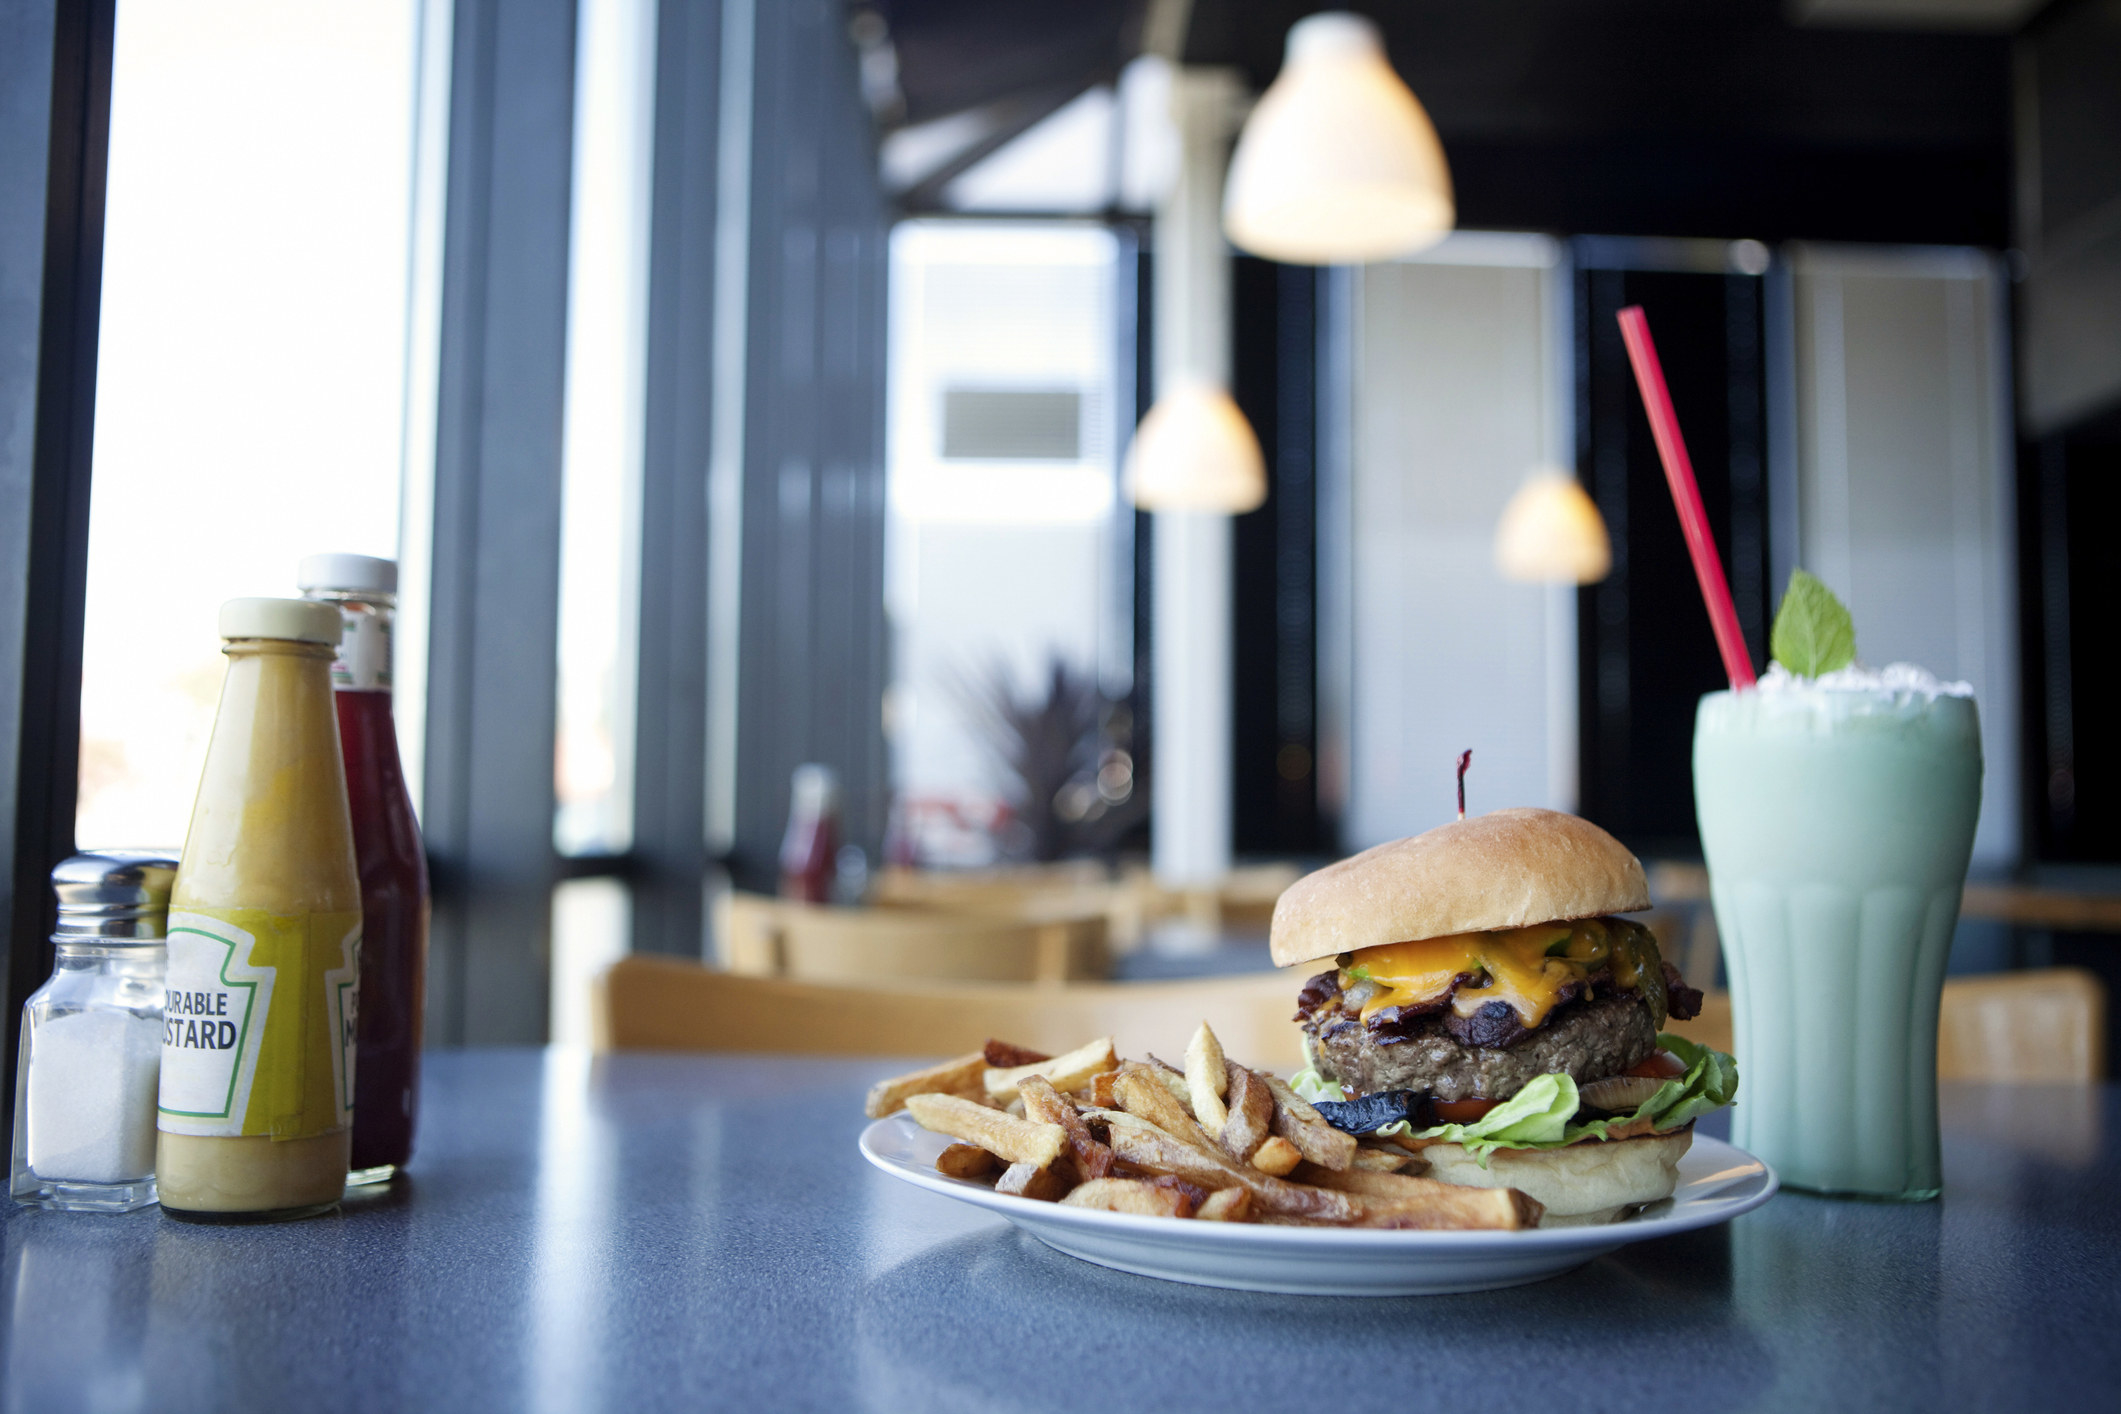 A burger and milkshake at a diner.